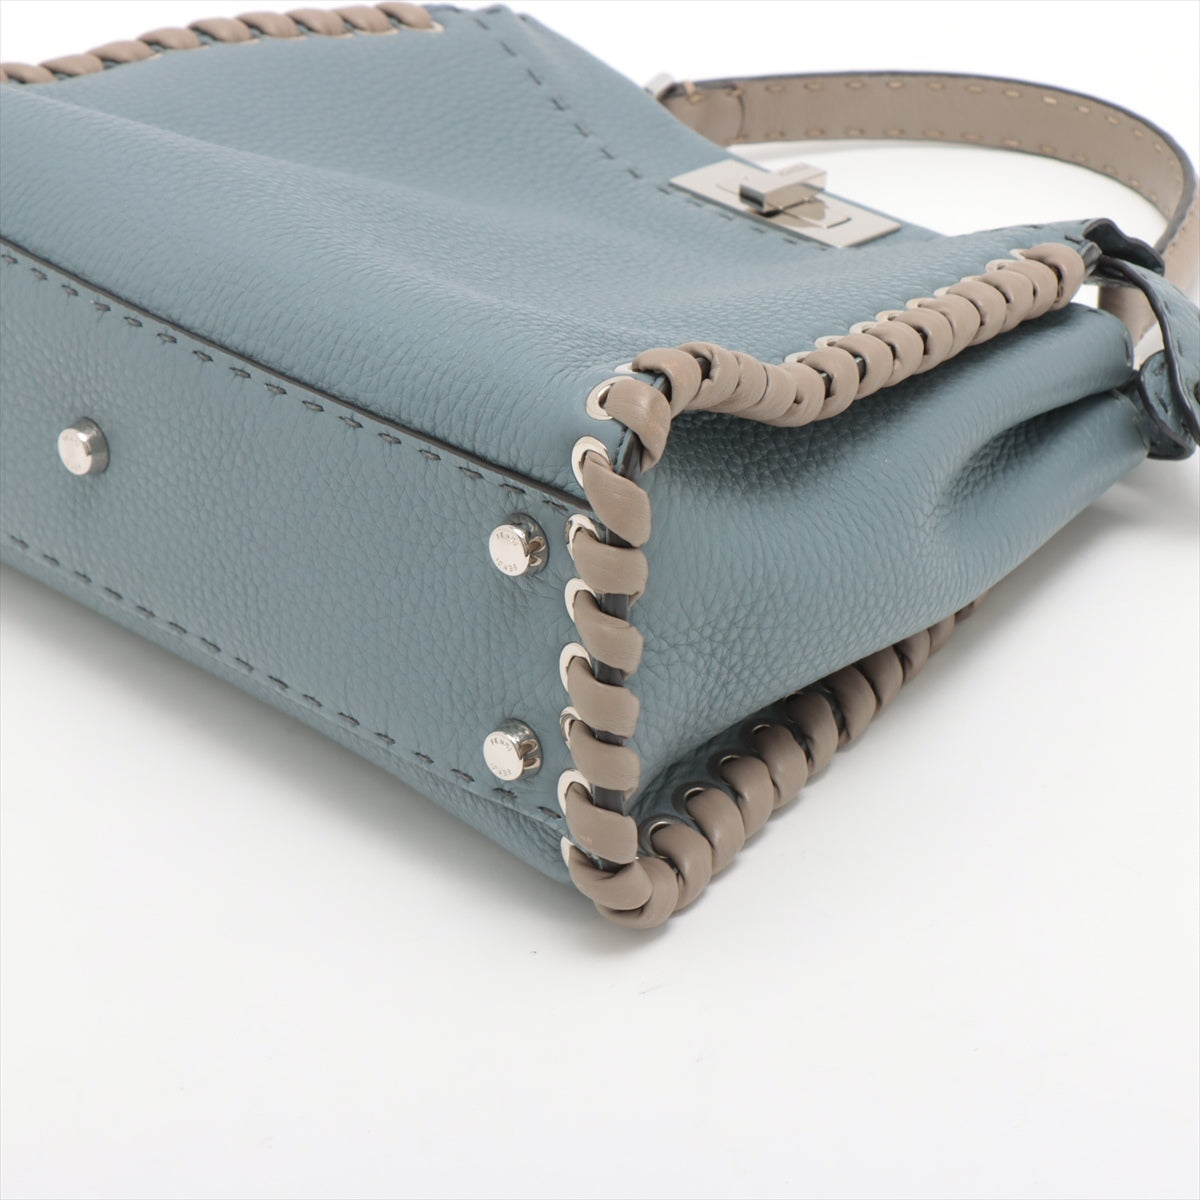 Fendi PEEKABOO REGULAR Selleria Leather 2way handbag Blue 8BN290